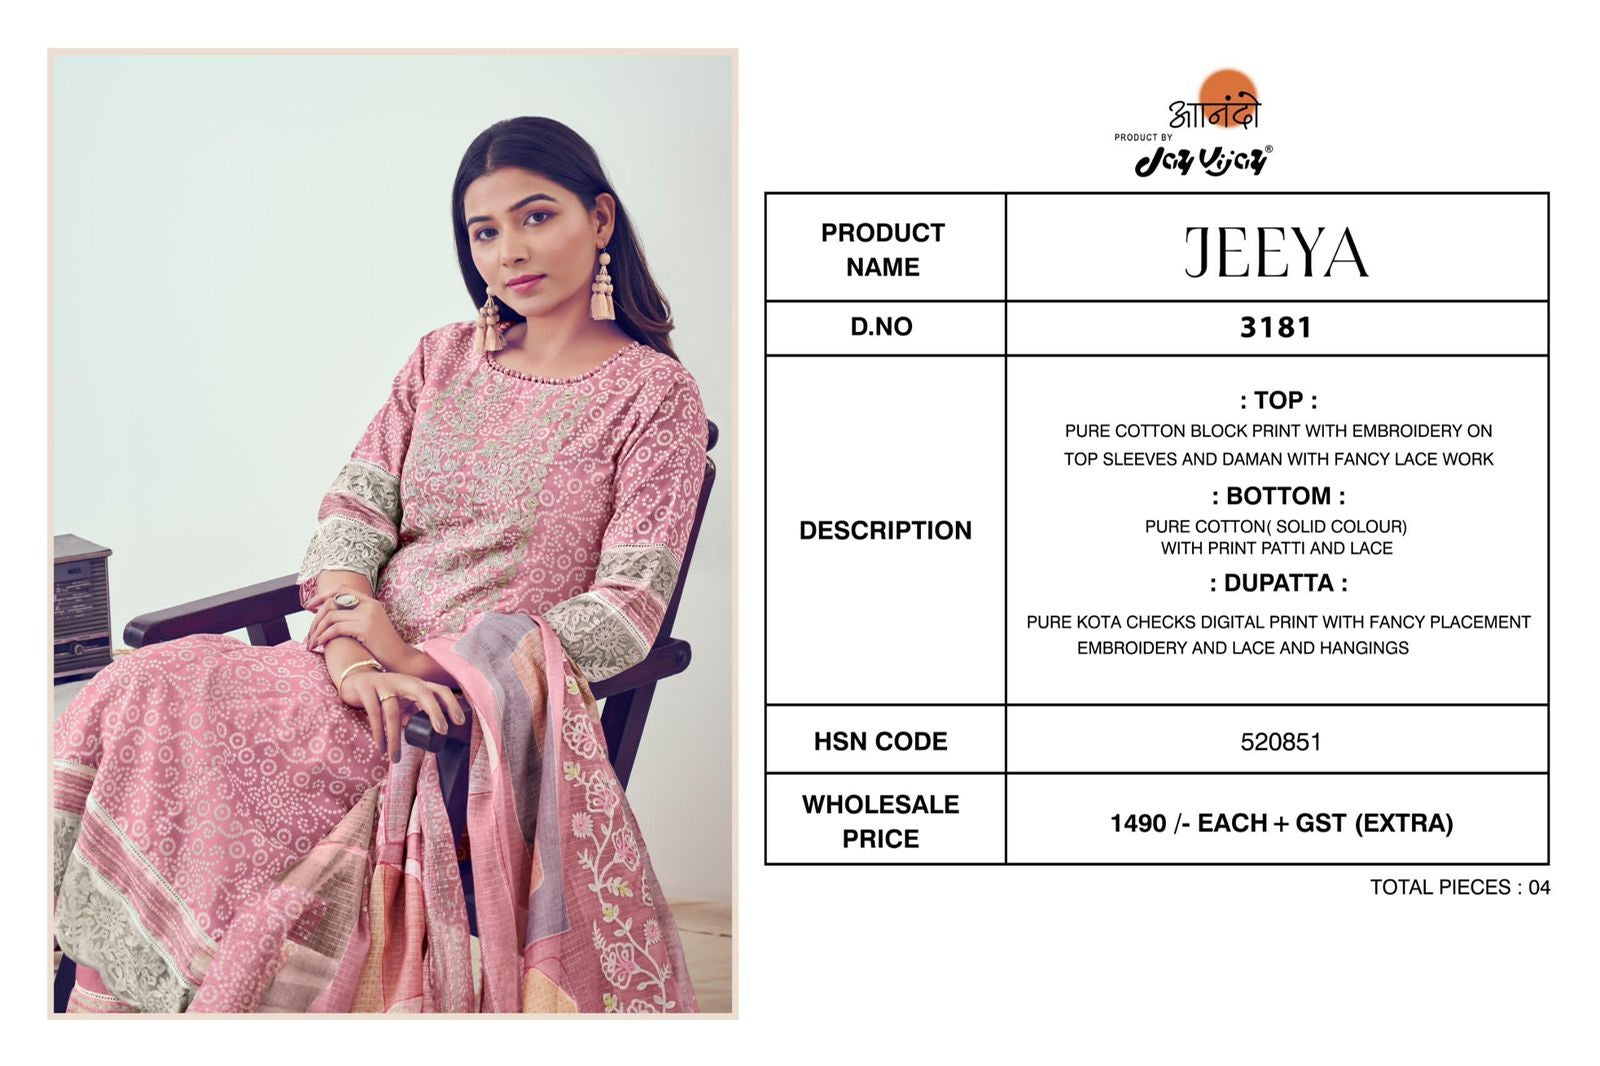 Jeeya-3181 Jay Vijay Pure Cotton Pant Style Suits